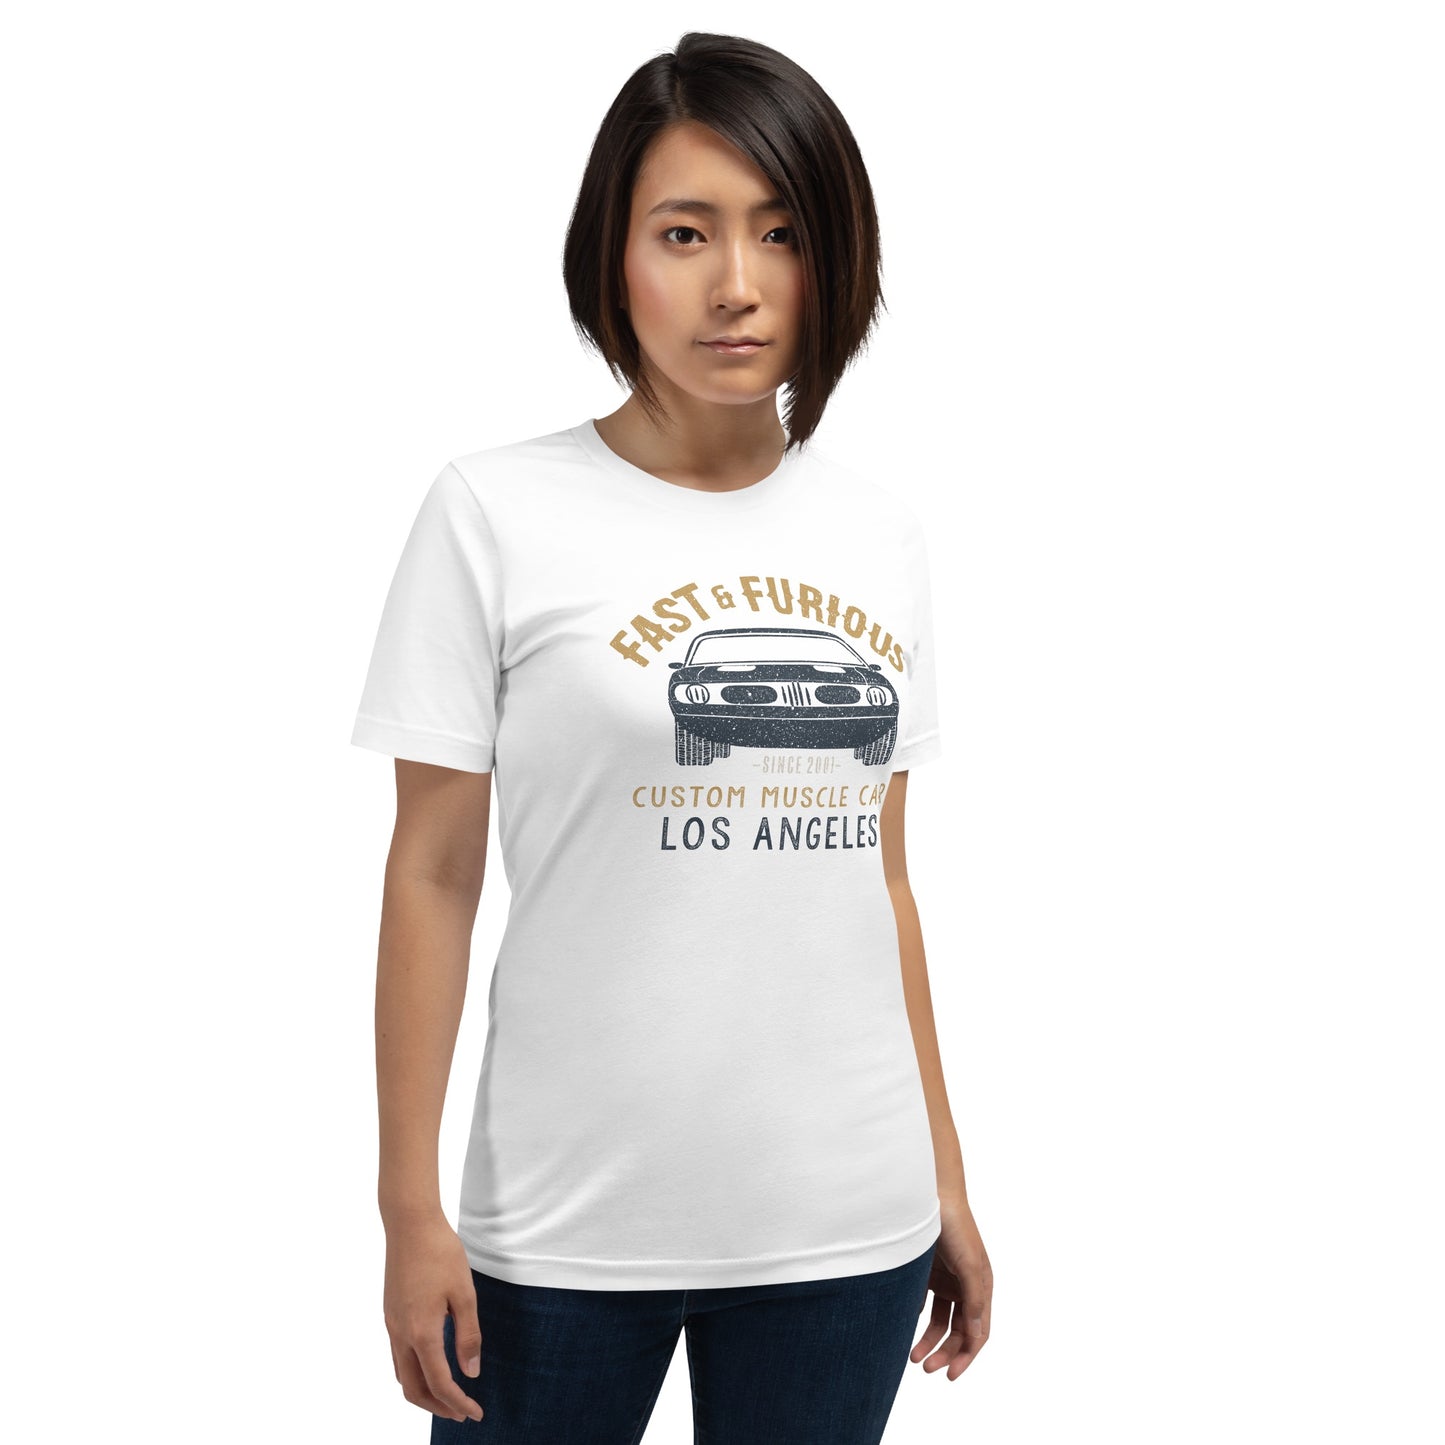 Fast & Furious Custom Muscle Cars T-Shirt